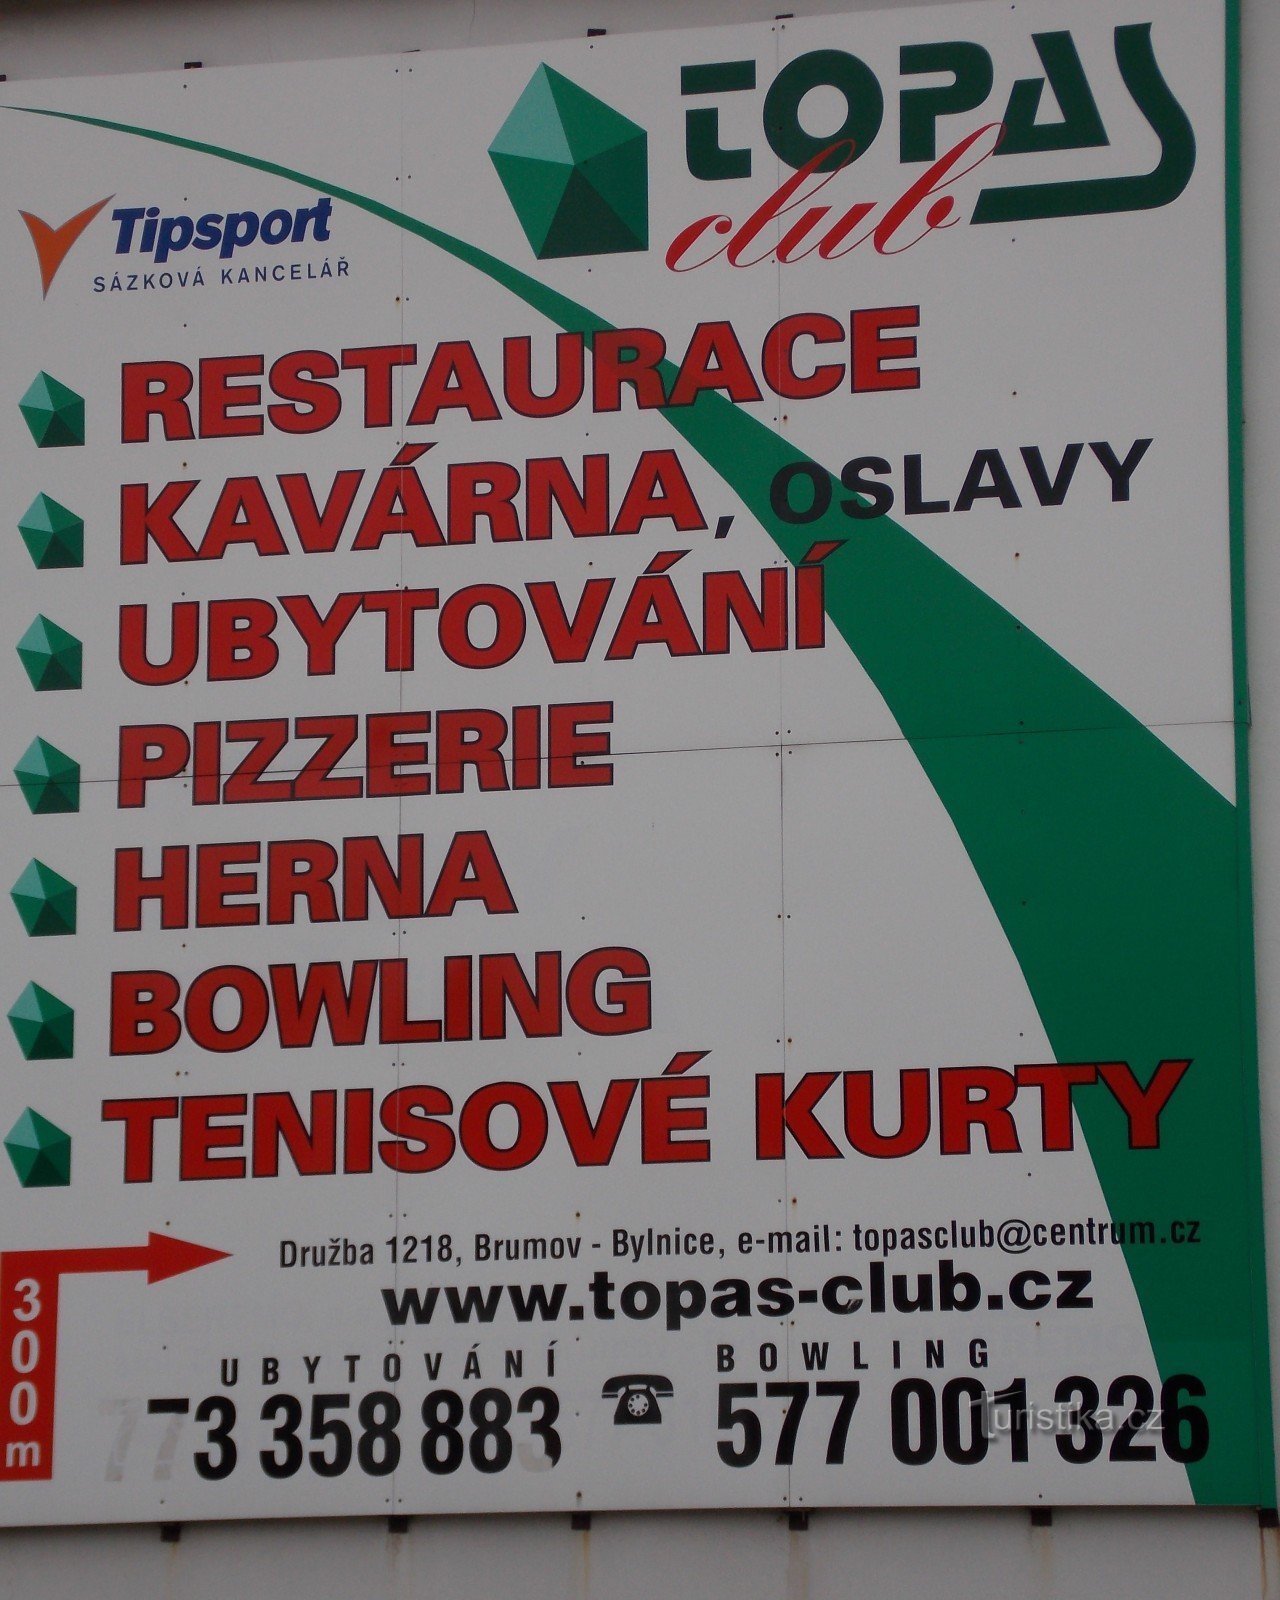 Topas Club στο Brumov - Bylnice